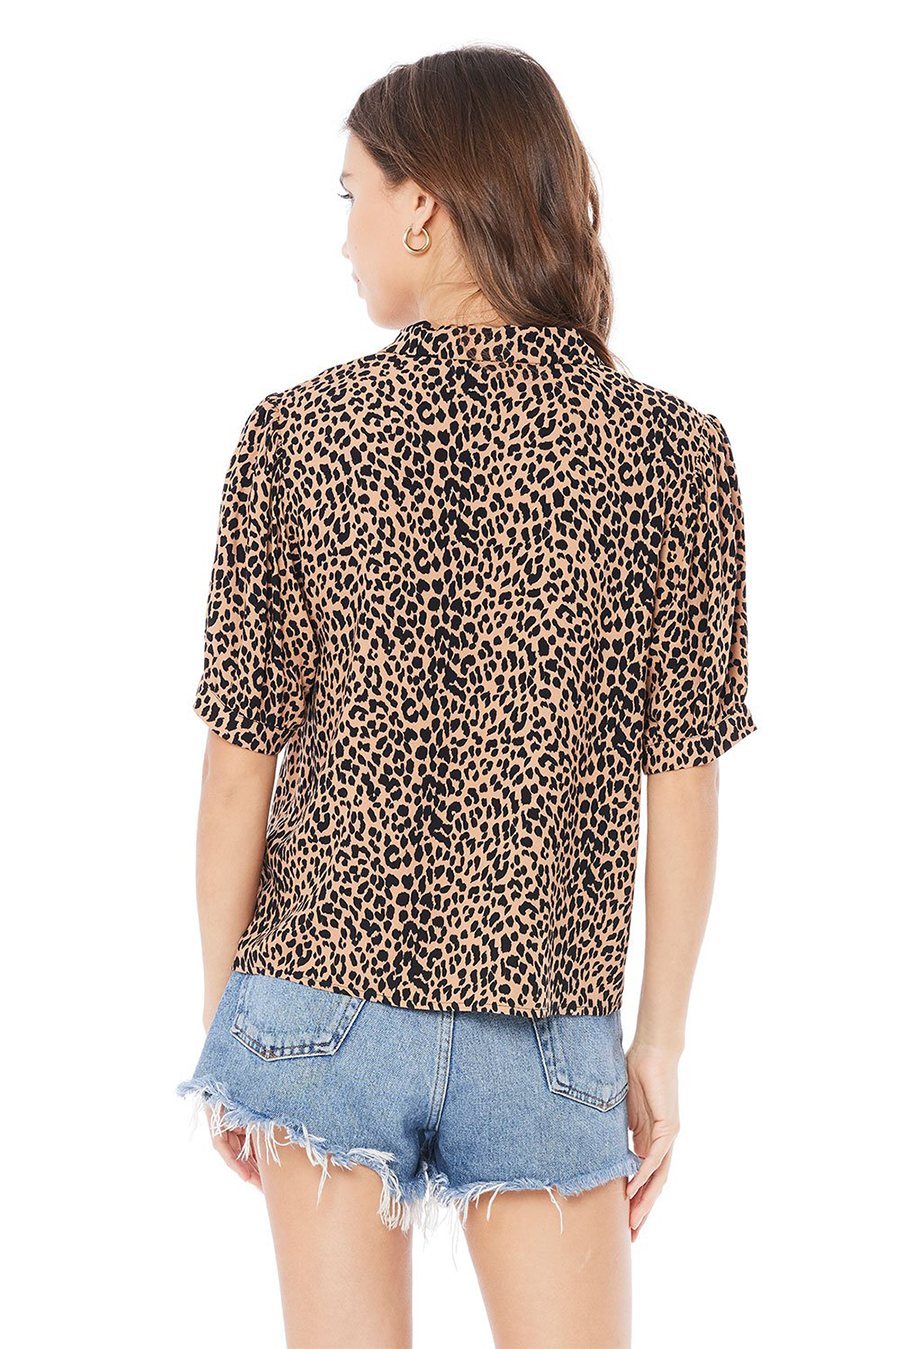 Tiff Blouse Short Sleeve | Wild Cheetah - Main Image Number 3 of 3